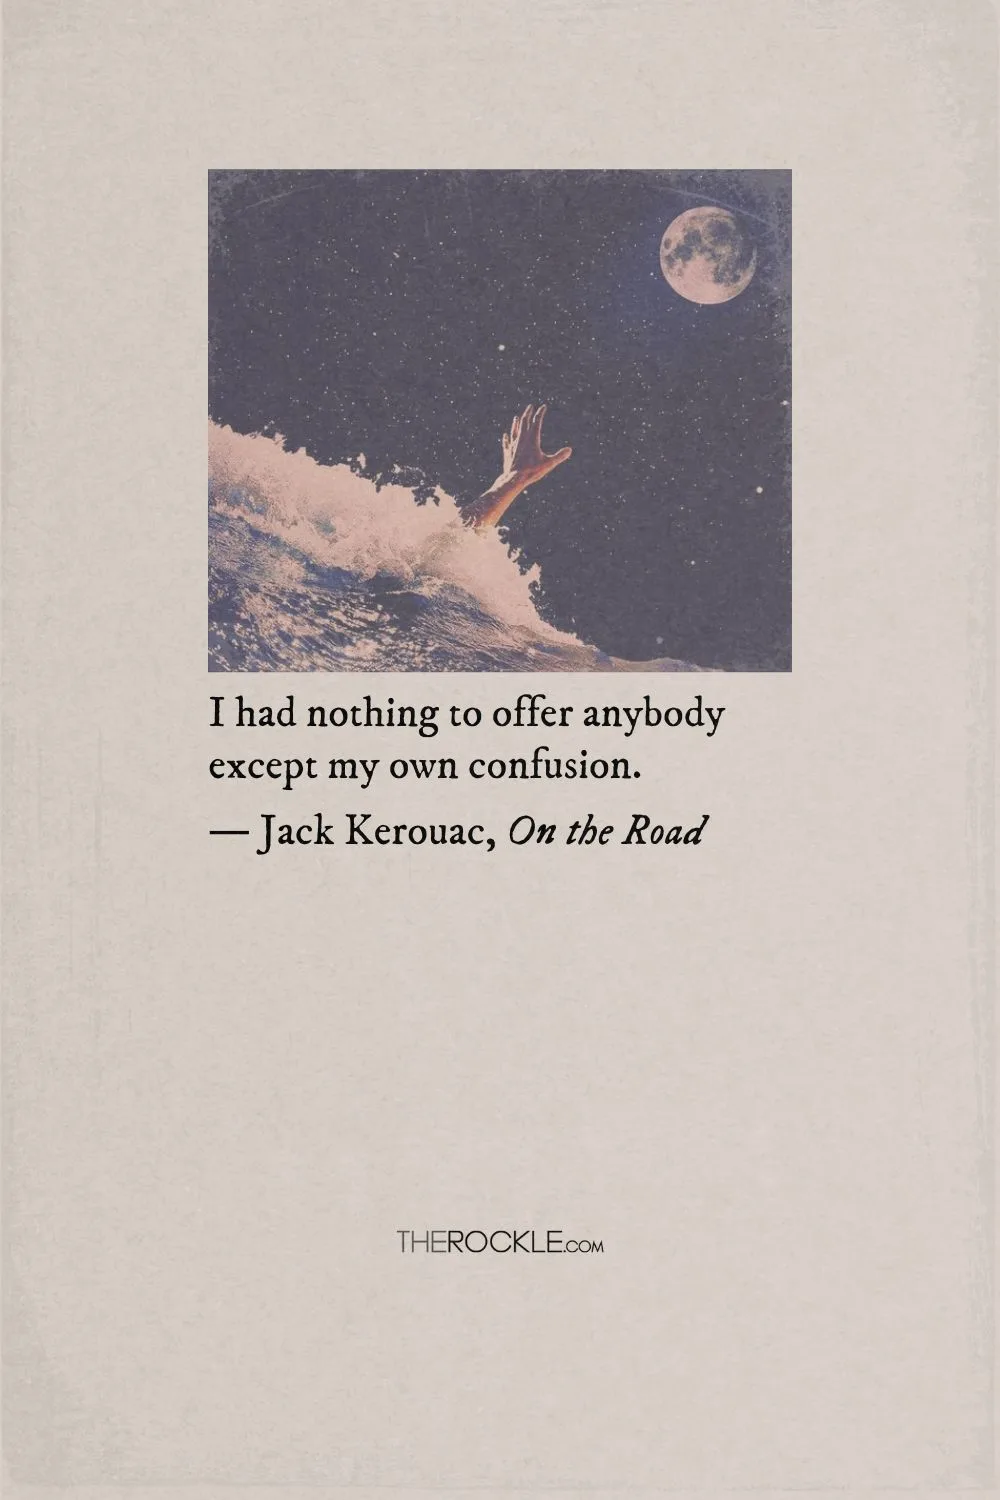 Jack Kerouac's quote about personal turmoil